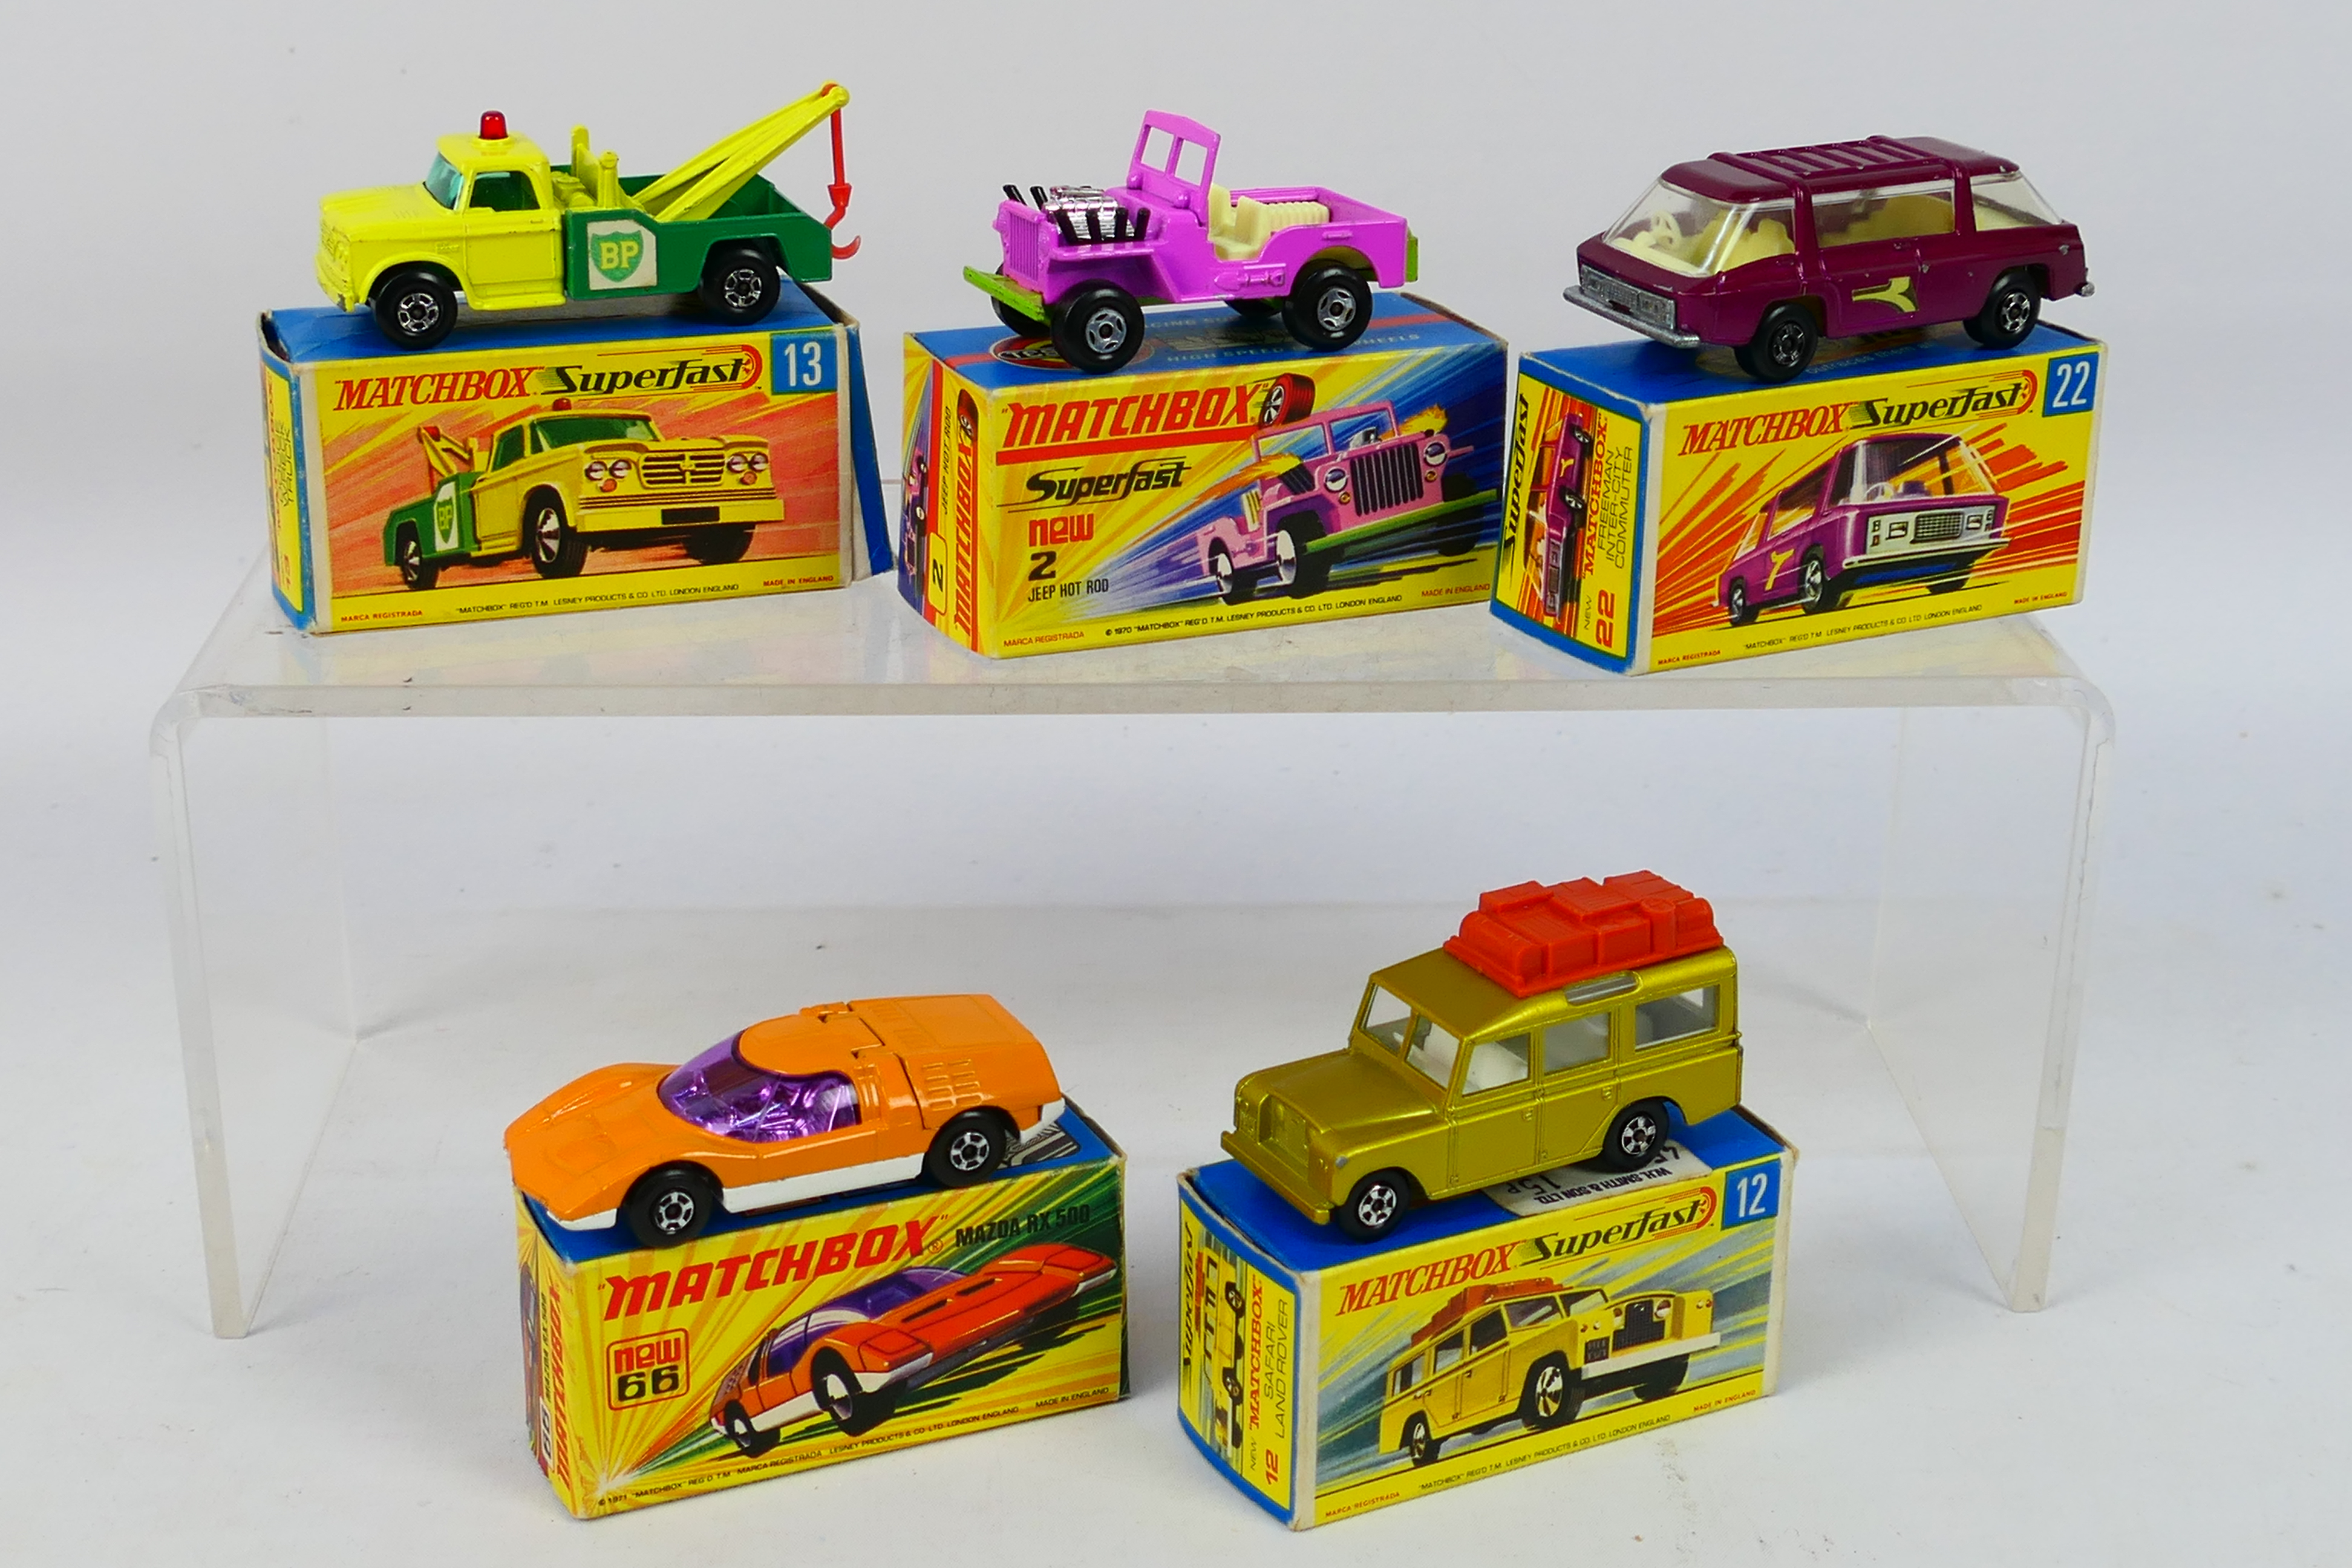 Matchbox - Superfast - 5 x boxed models, Jeep Hot Rod # 2, Land Rover Safari # 12,